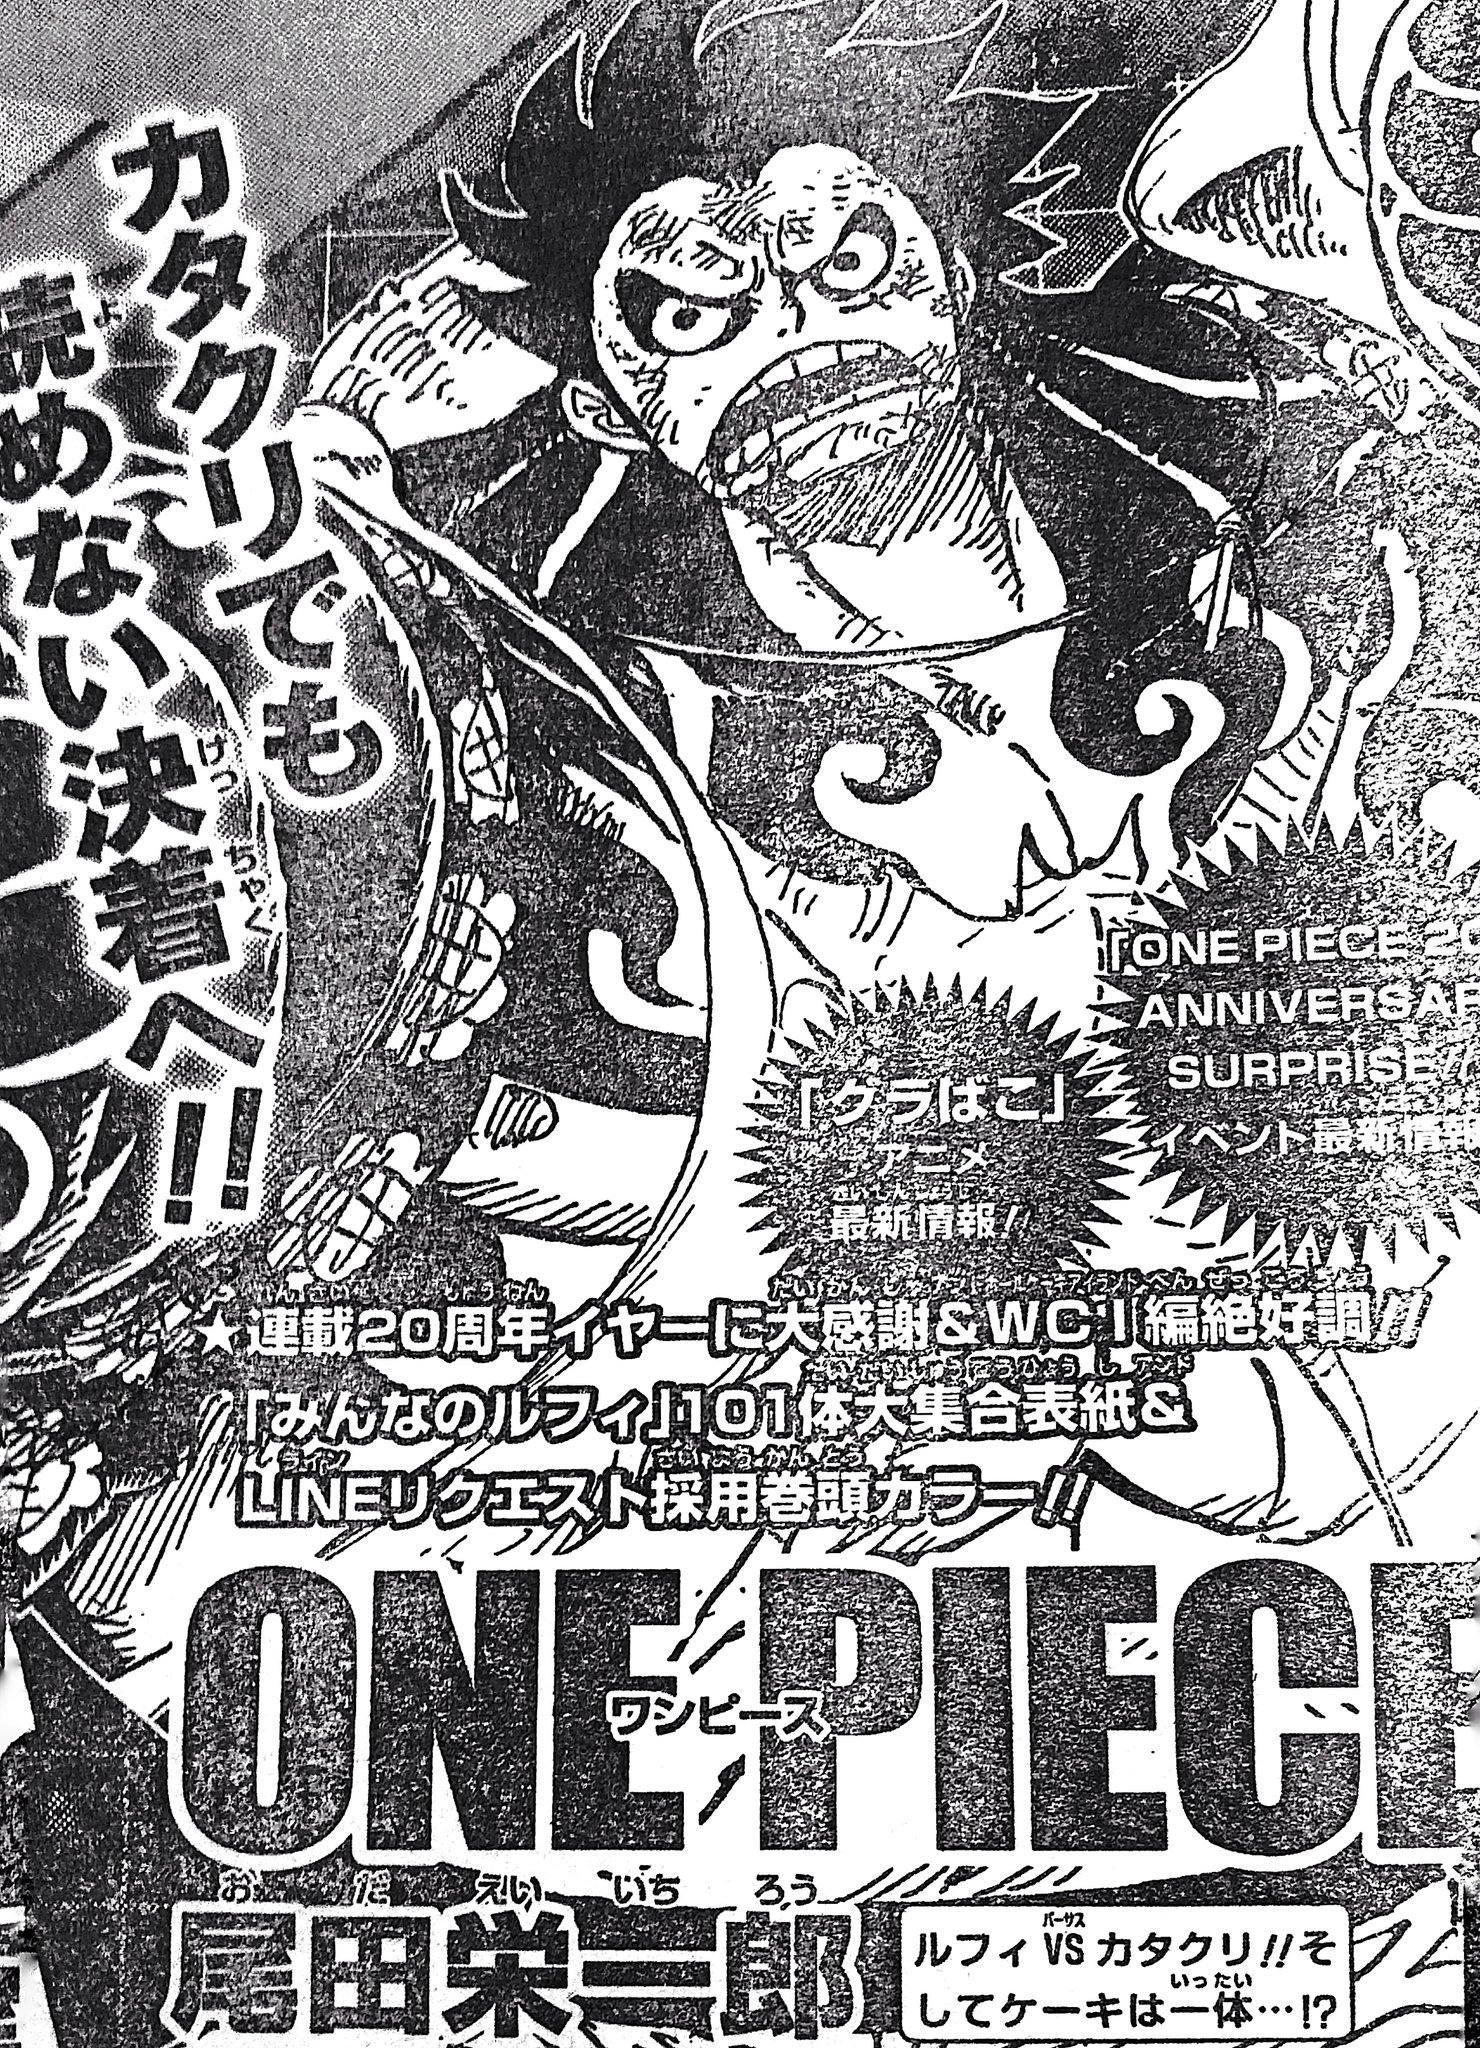 Twitter 上的 まな One Piece 次号ジャンプの煽り文は カタクリでも読めない決着へ 来週からvsカタクリの最終決戦に突入 先々週の生放送で杉田さんが仰っていた 何週間か先のジャンプに掲載されるめちゃめちゃ面白い話 でカタクリ戦の決着がつくのかな Wci